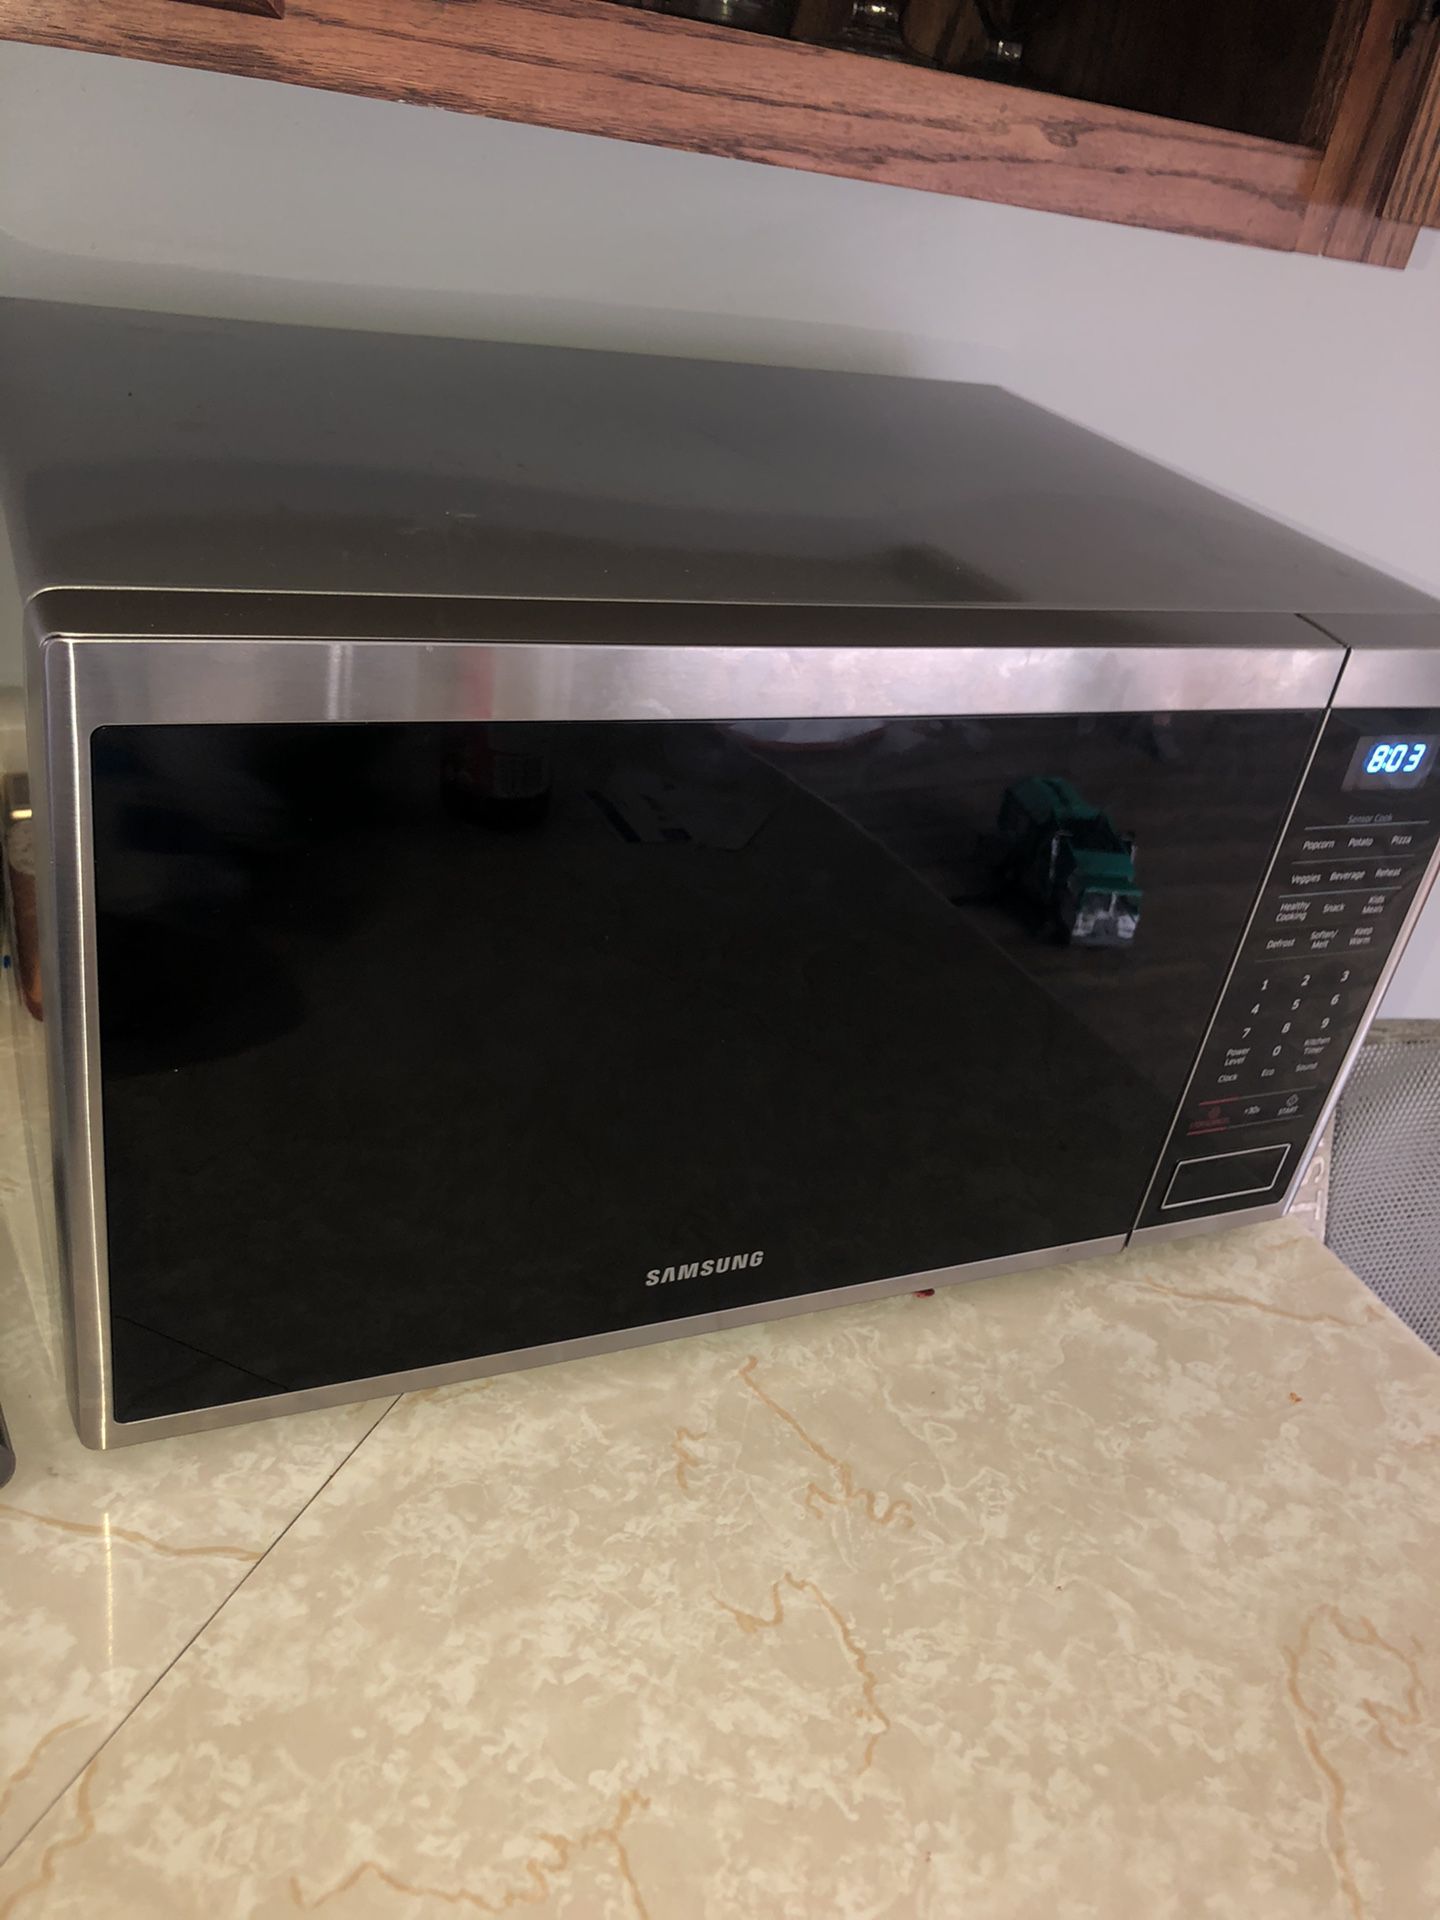 Samsung 2019 microwave